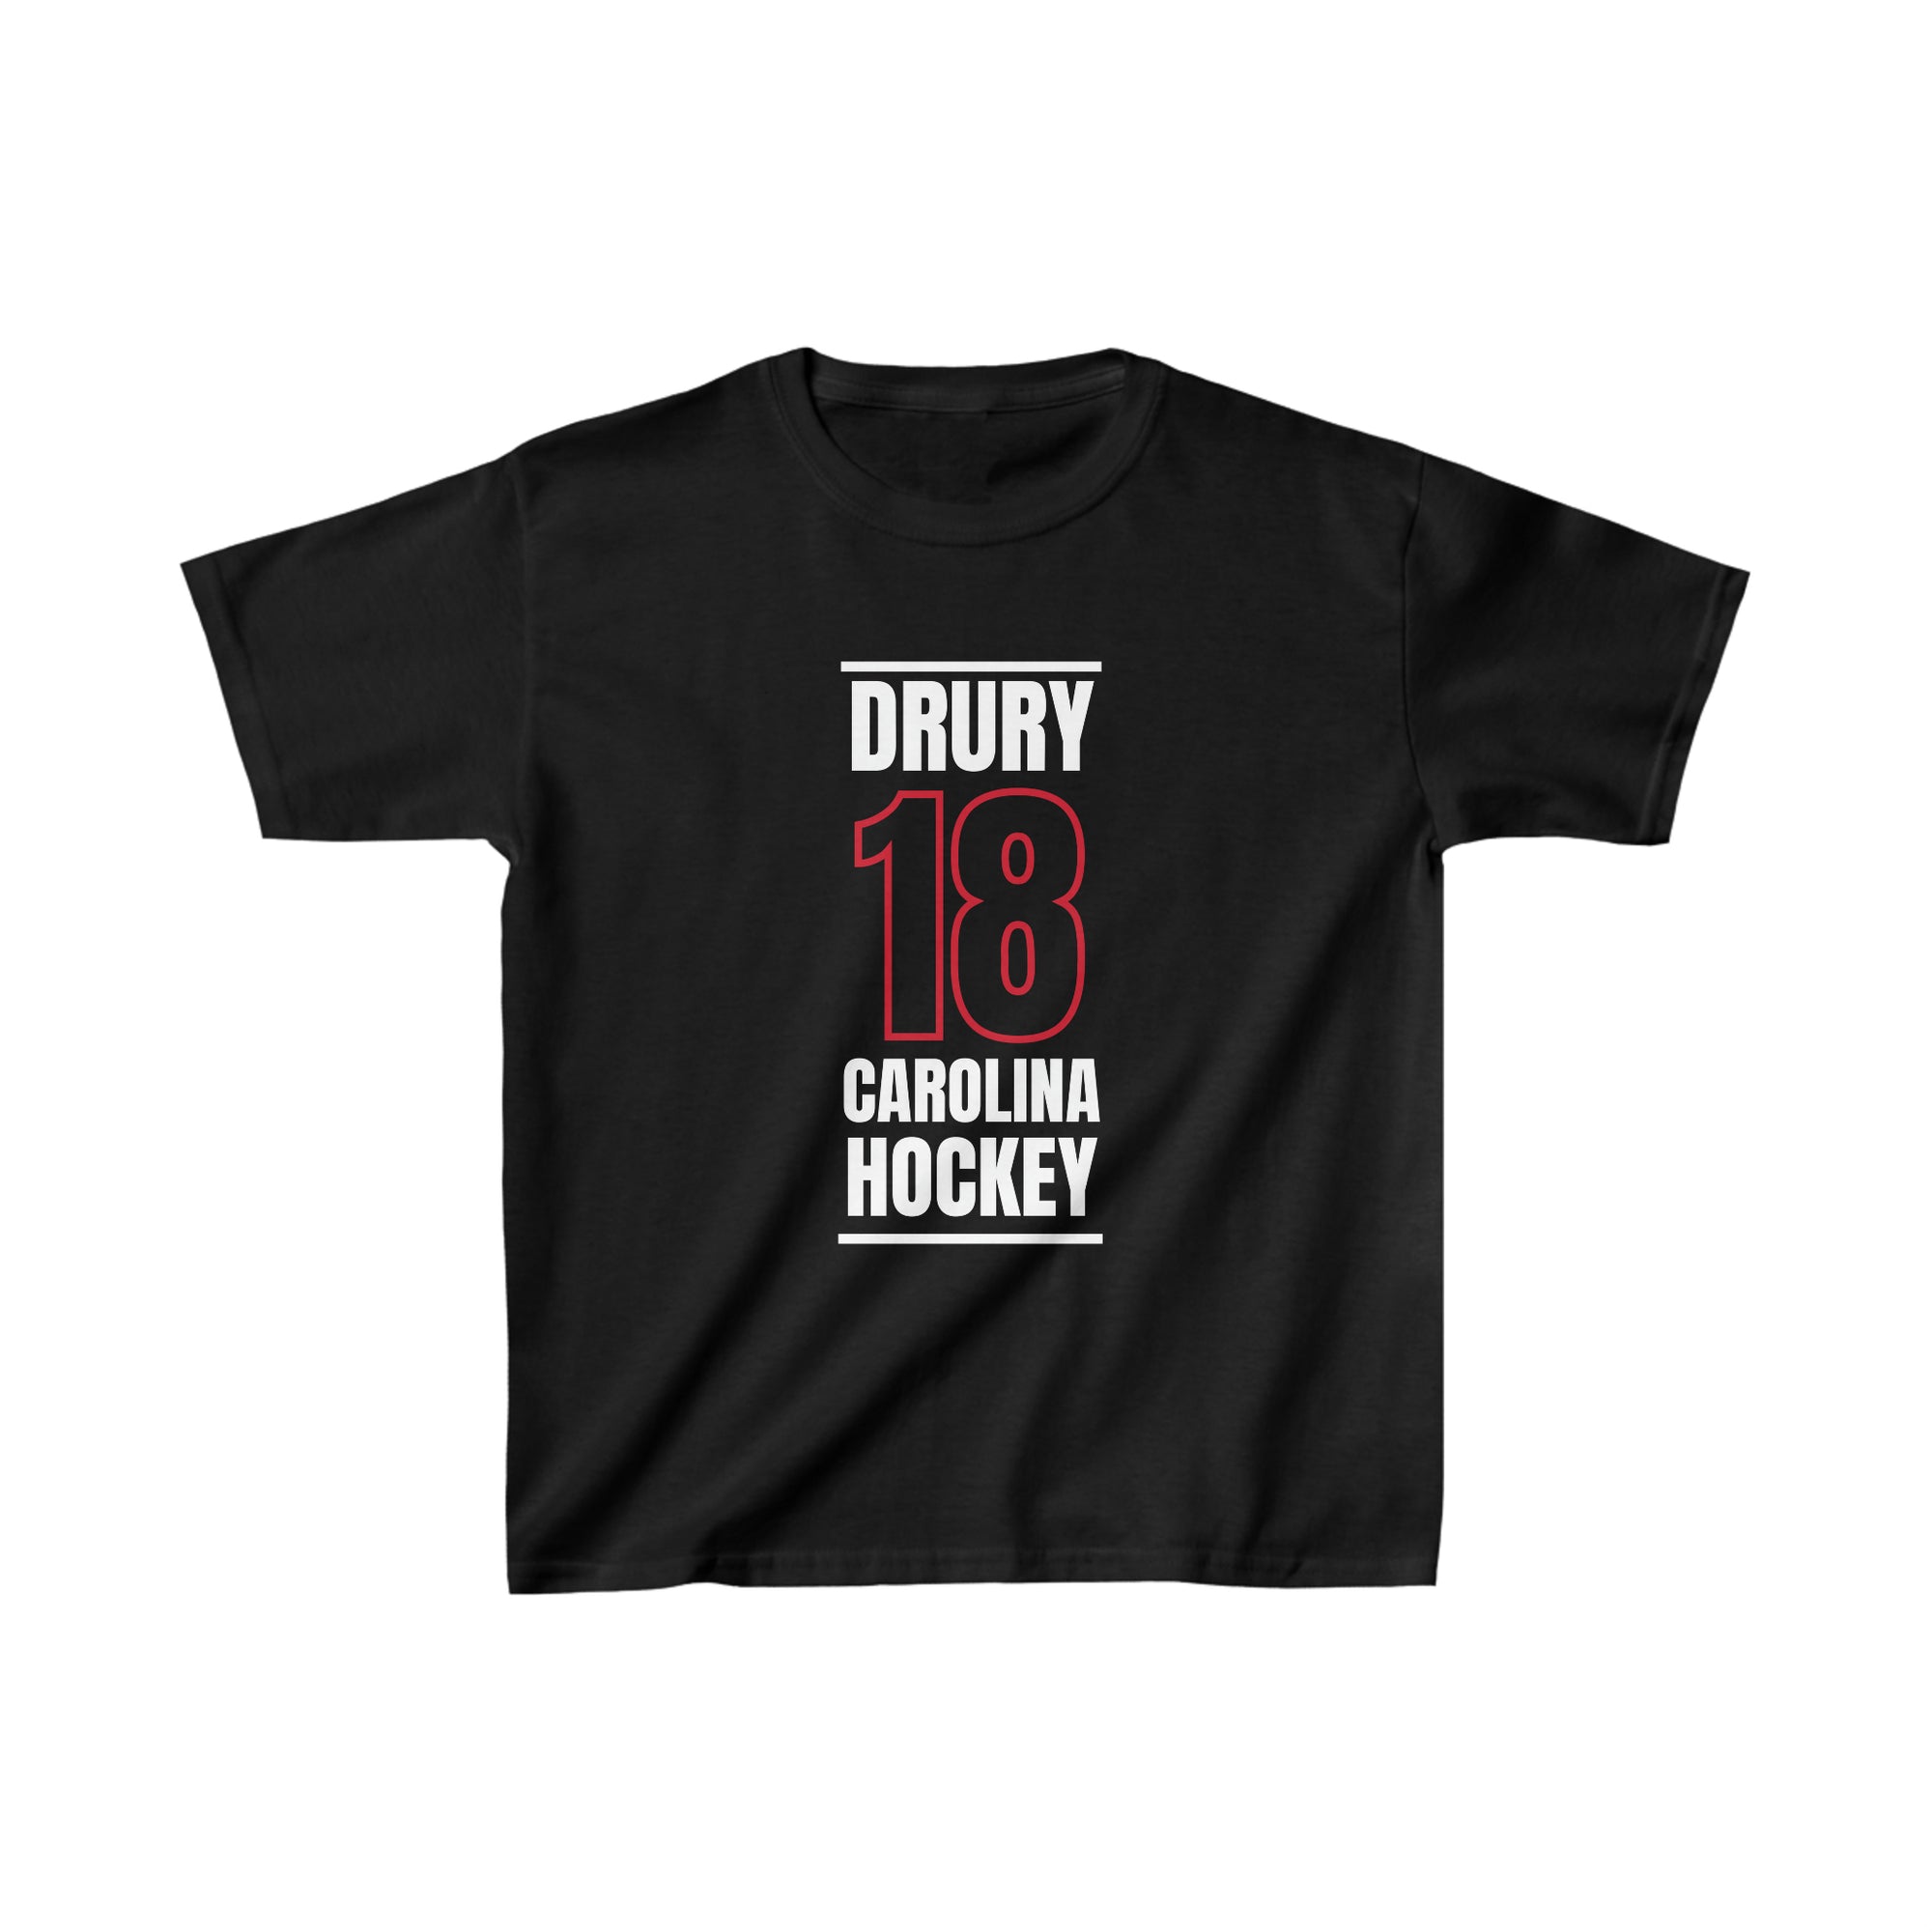 Drury 18 Carolina Hockey Black Vertical Design Kids Tee